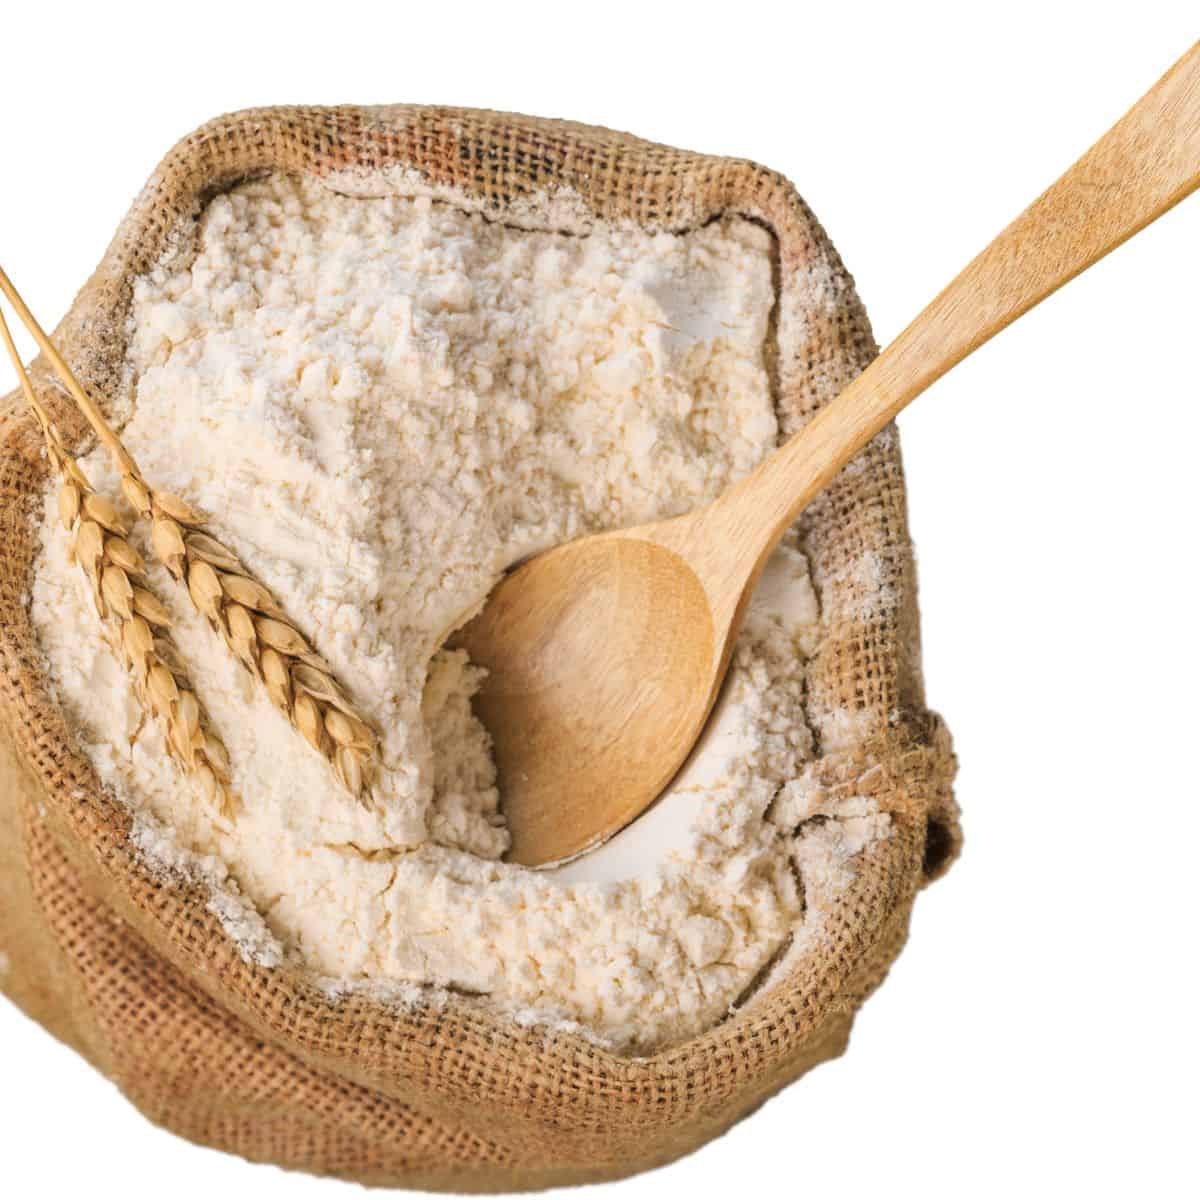 How To Store Bulk Flour Long-Term